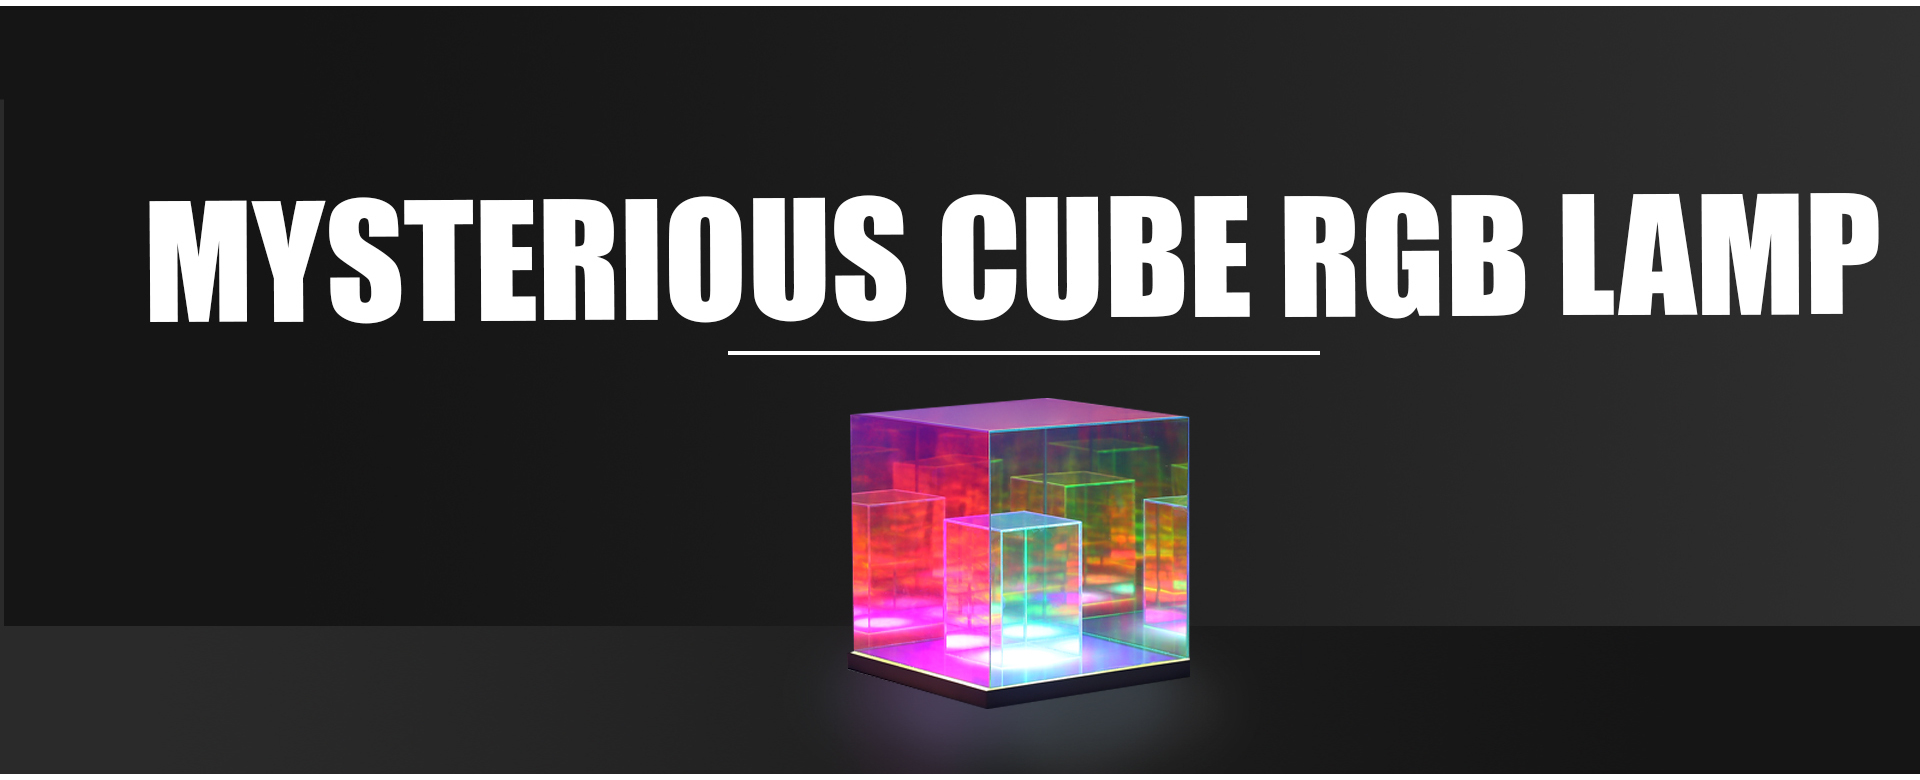 Cube RGB Lamp!